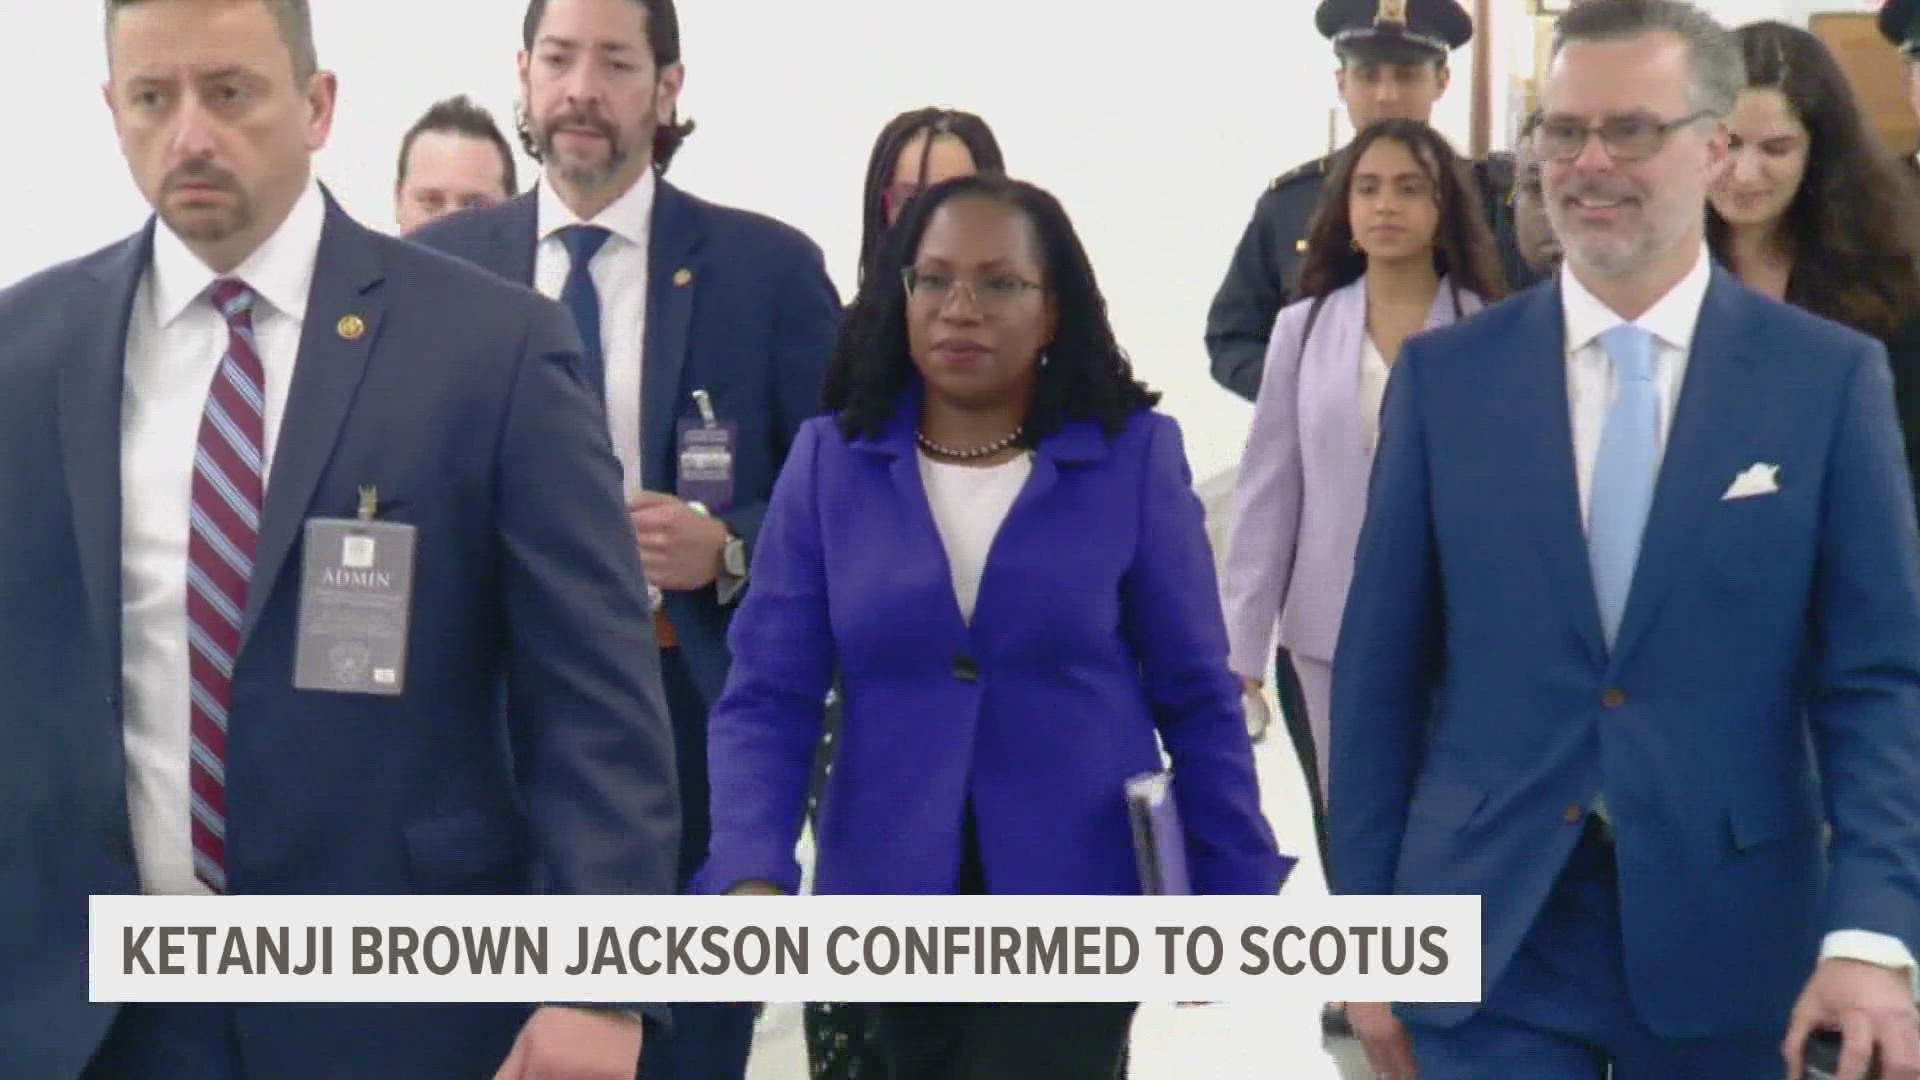 Ketanji Brown Jackson’s confirmed to SCOTUS